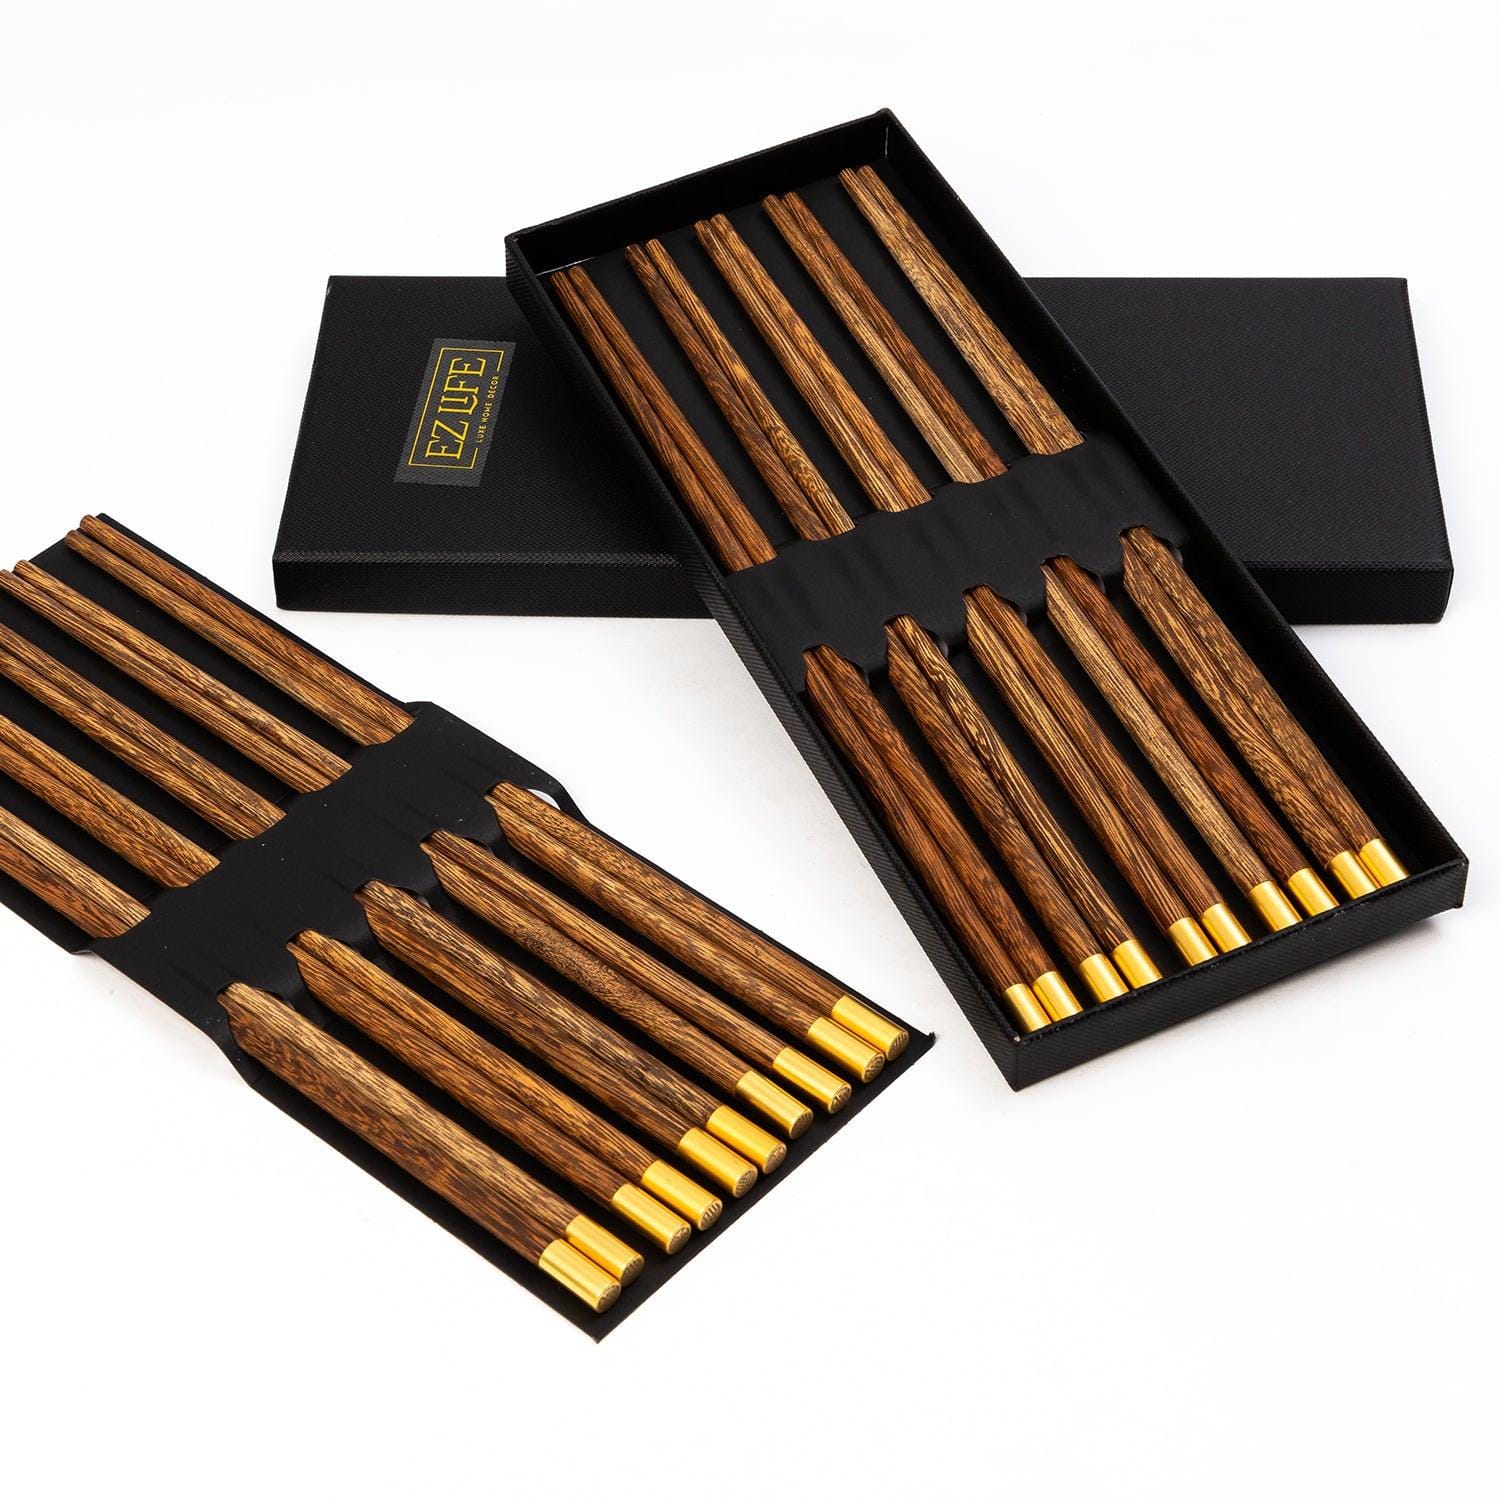 10 Pairs Light Rose Wood Round Chopsticks Set with Gold Top (25 cms Length) - EZ Life